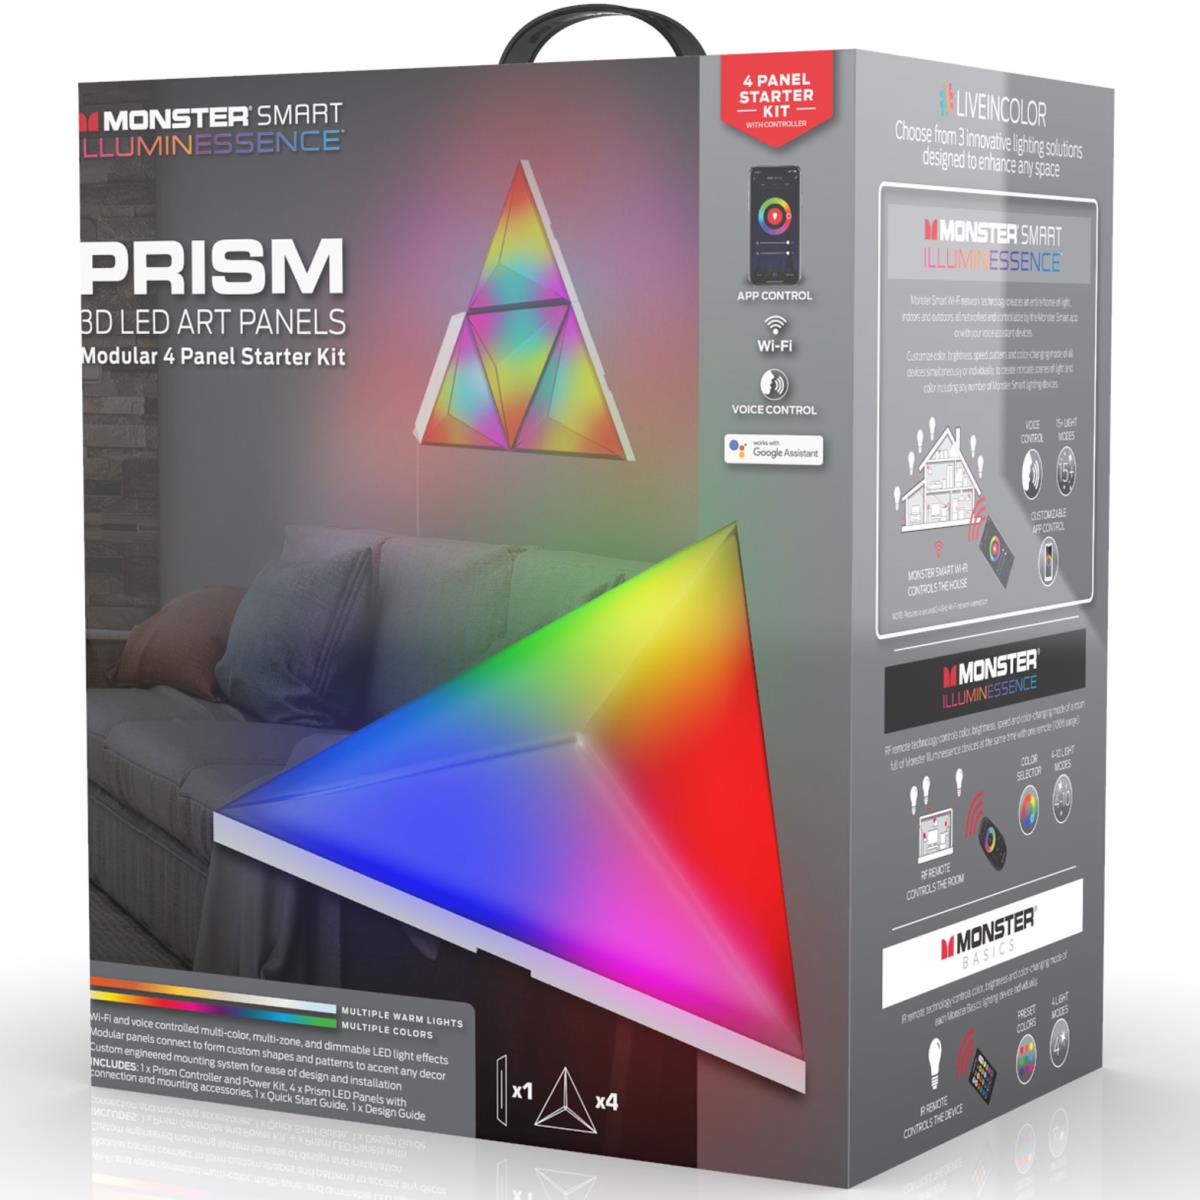 Monster: Illuminessence Prism 3D LED Panels Startkit